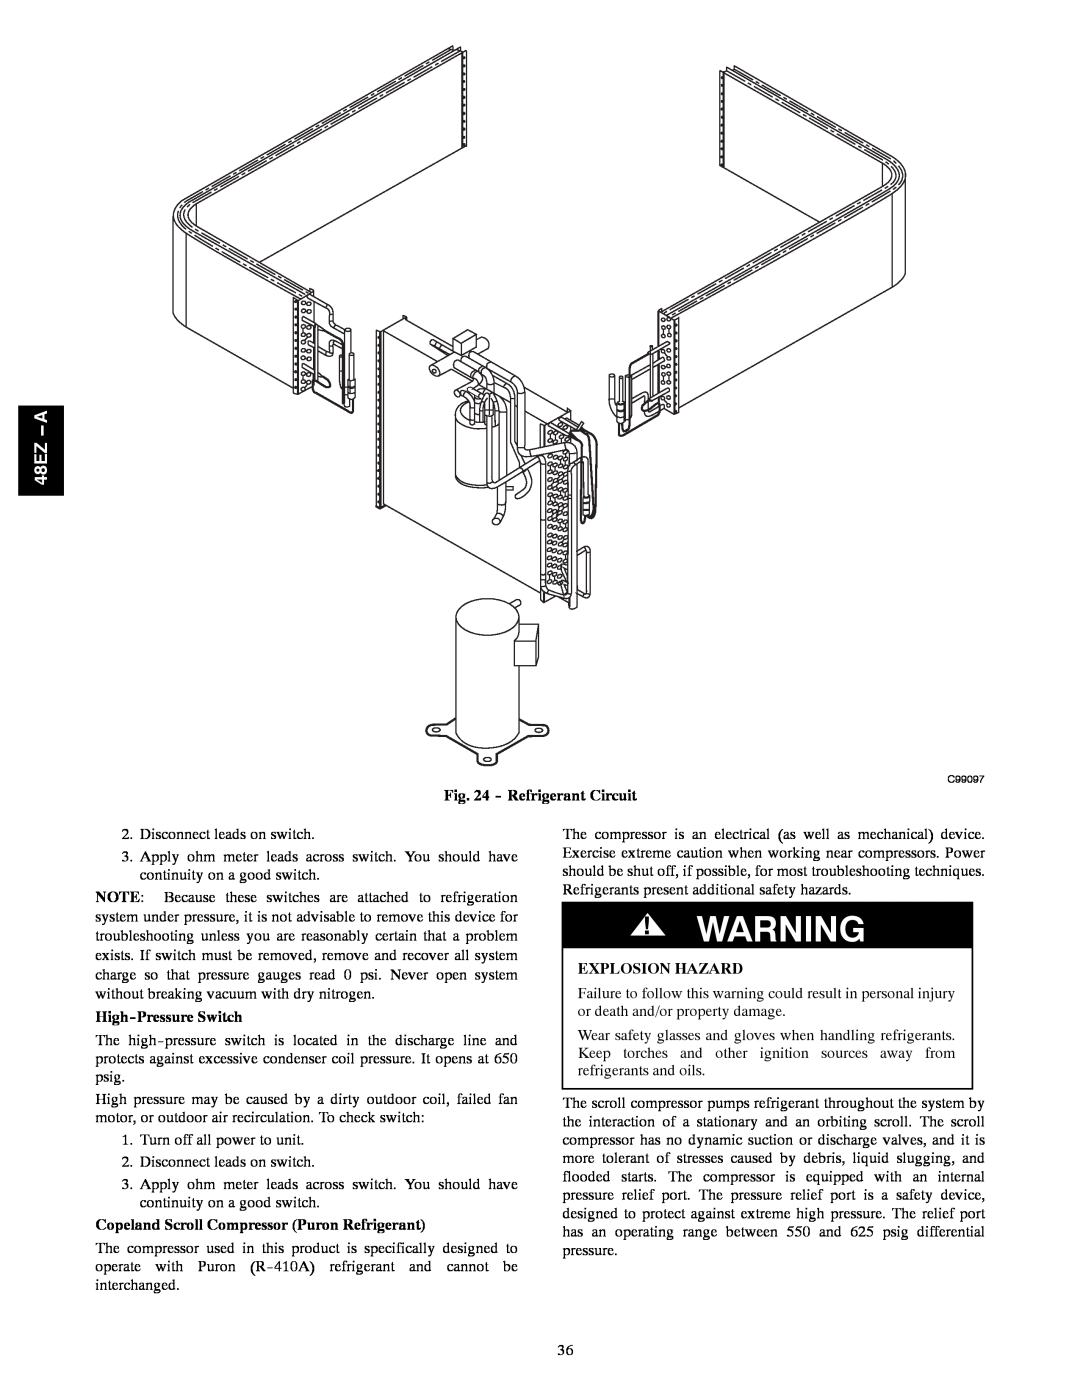 Carrier 48EZ(N)-A Refrigerant Circuit, High-PressureSwitch, Copeland Scroll Compressor Puron Refrigerant, Explosion Hazard 